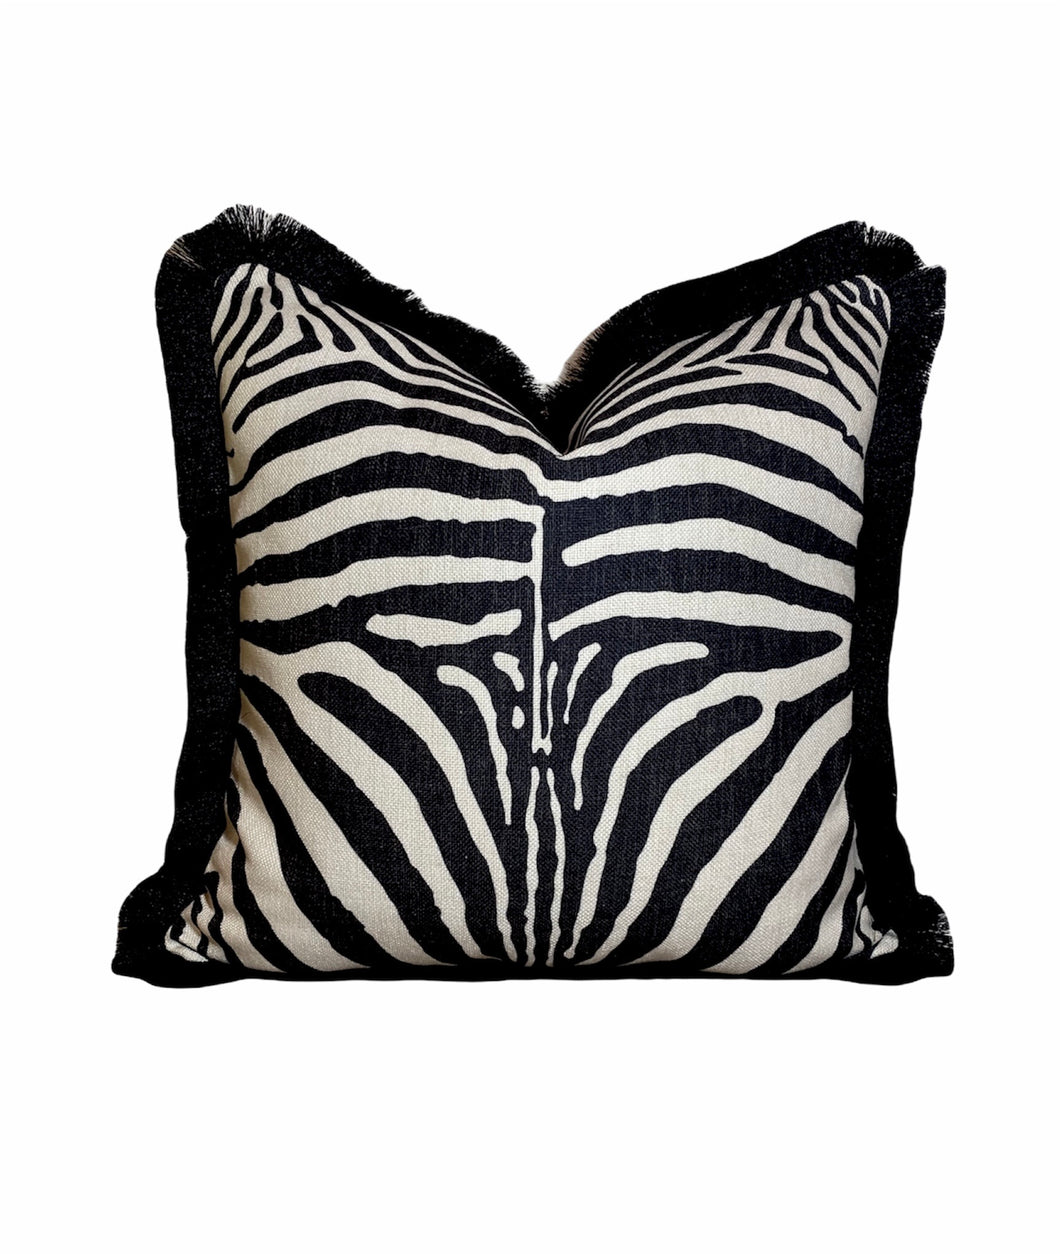 Zebra Animal Print Black and White Linen Black Fringe Kissen Kissen Rustikal